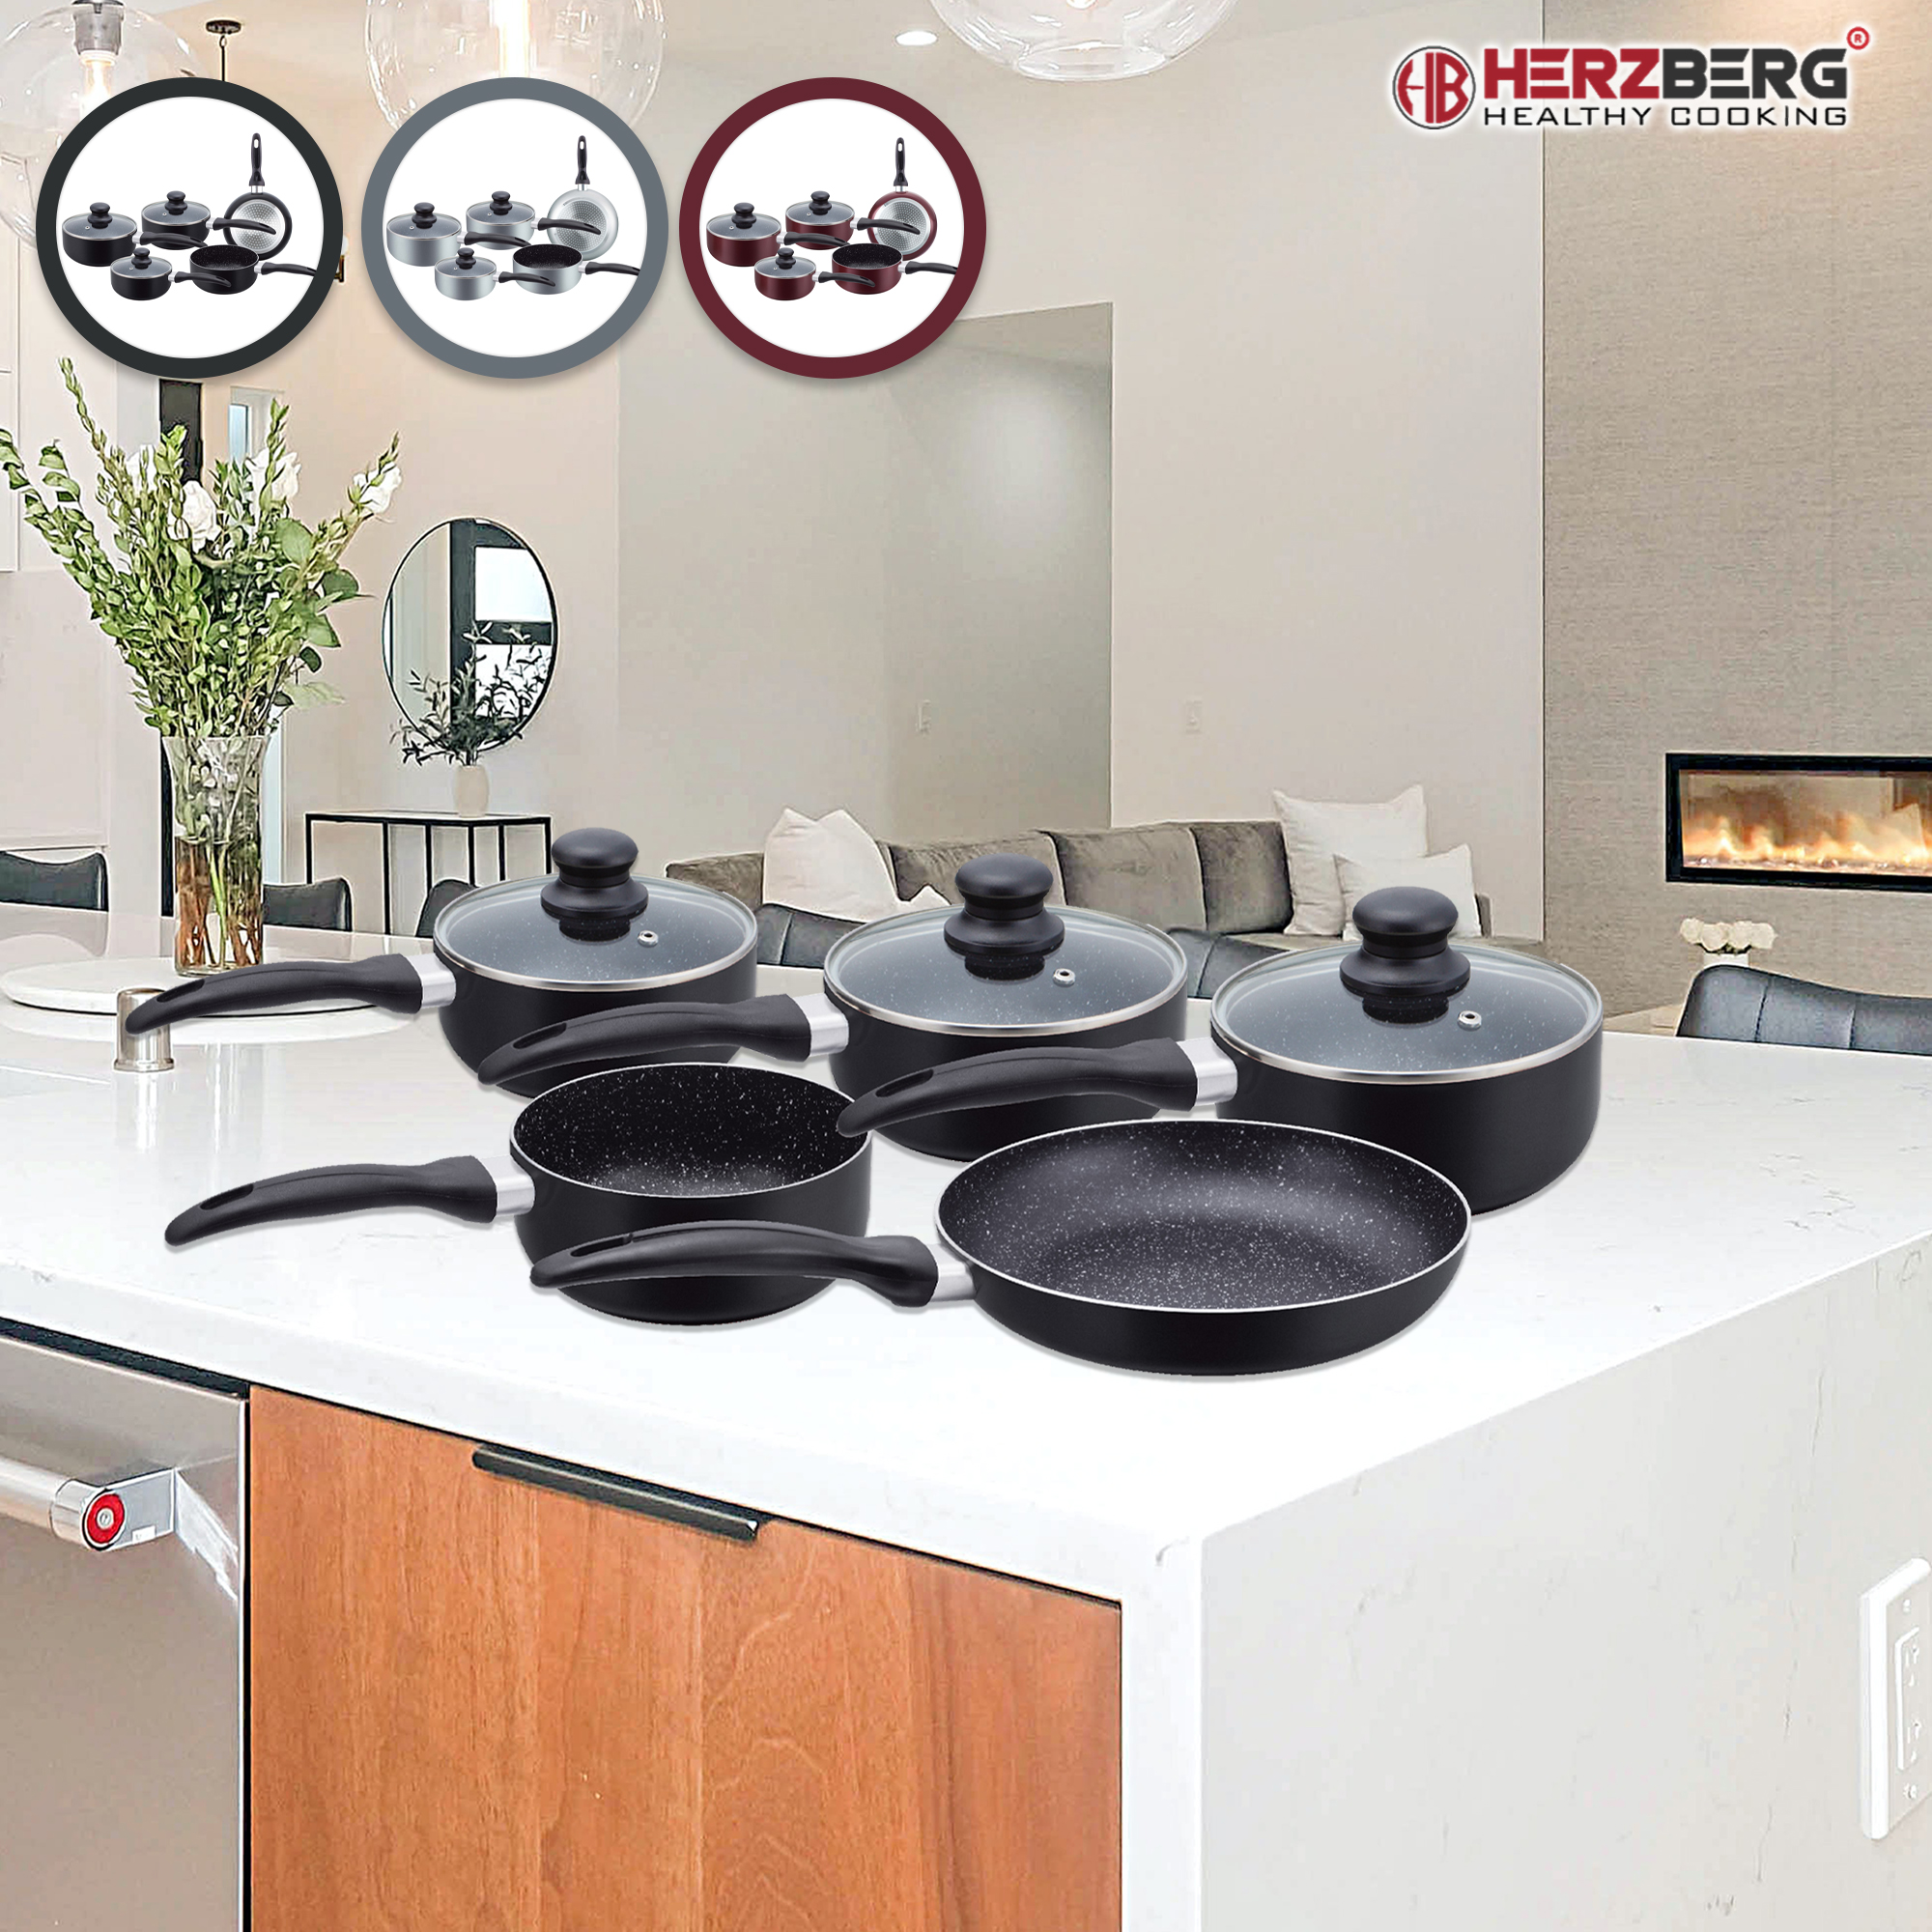 Herzberg-HG-5003BR-Batterie-de-cuisine-en-marbre-8-piece-7